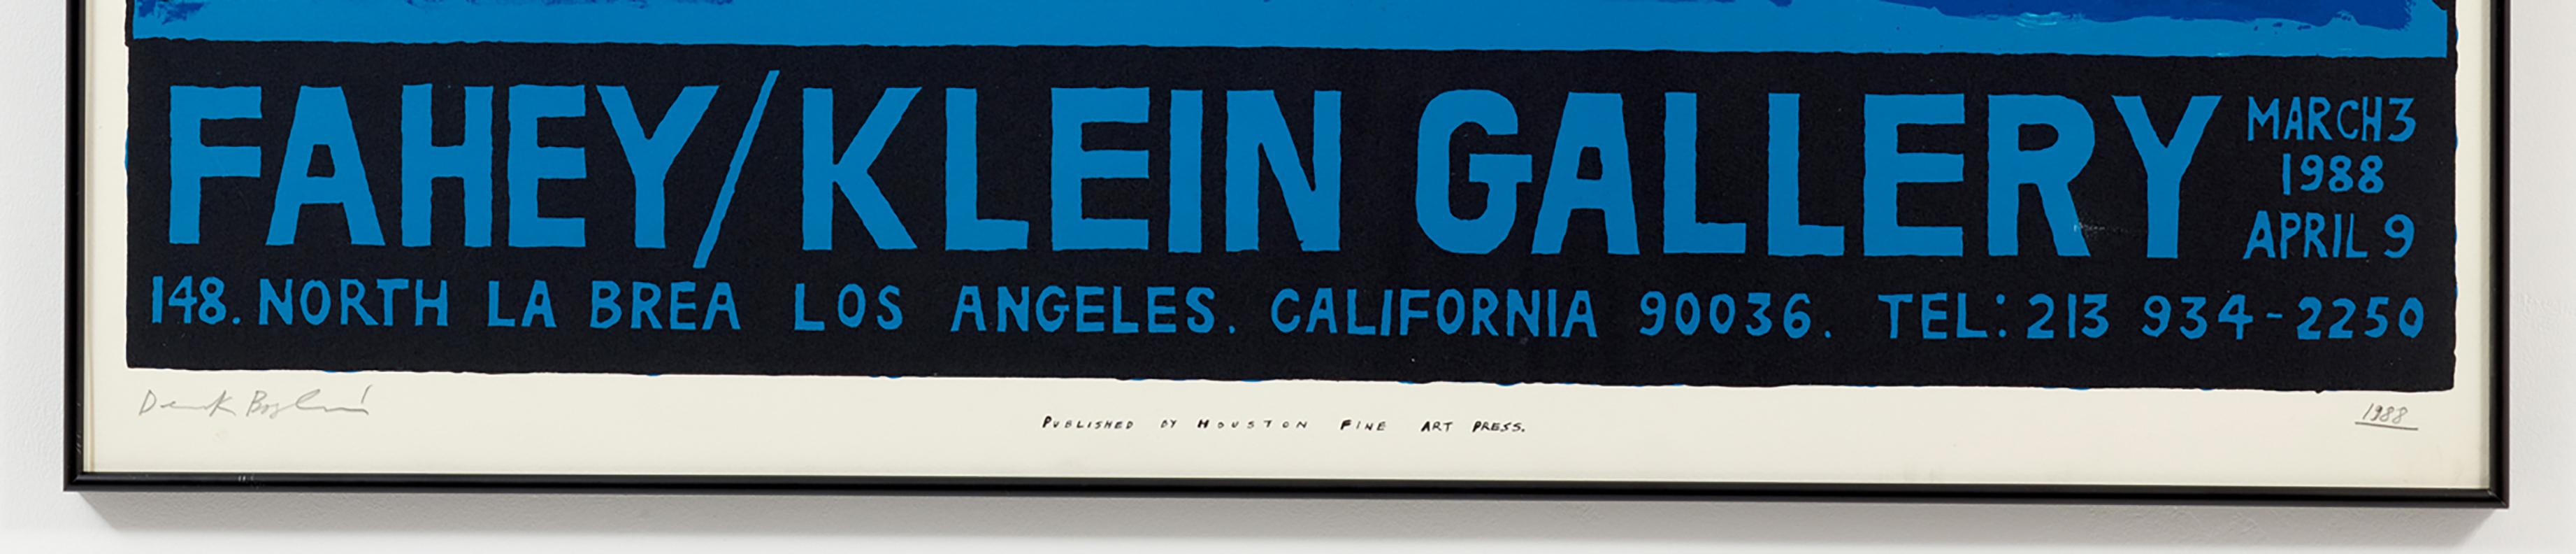 Fahey/Klein Gallery, Los Angeles - Modern Print by Derek Boshier